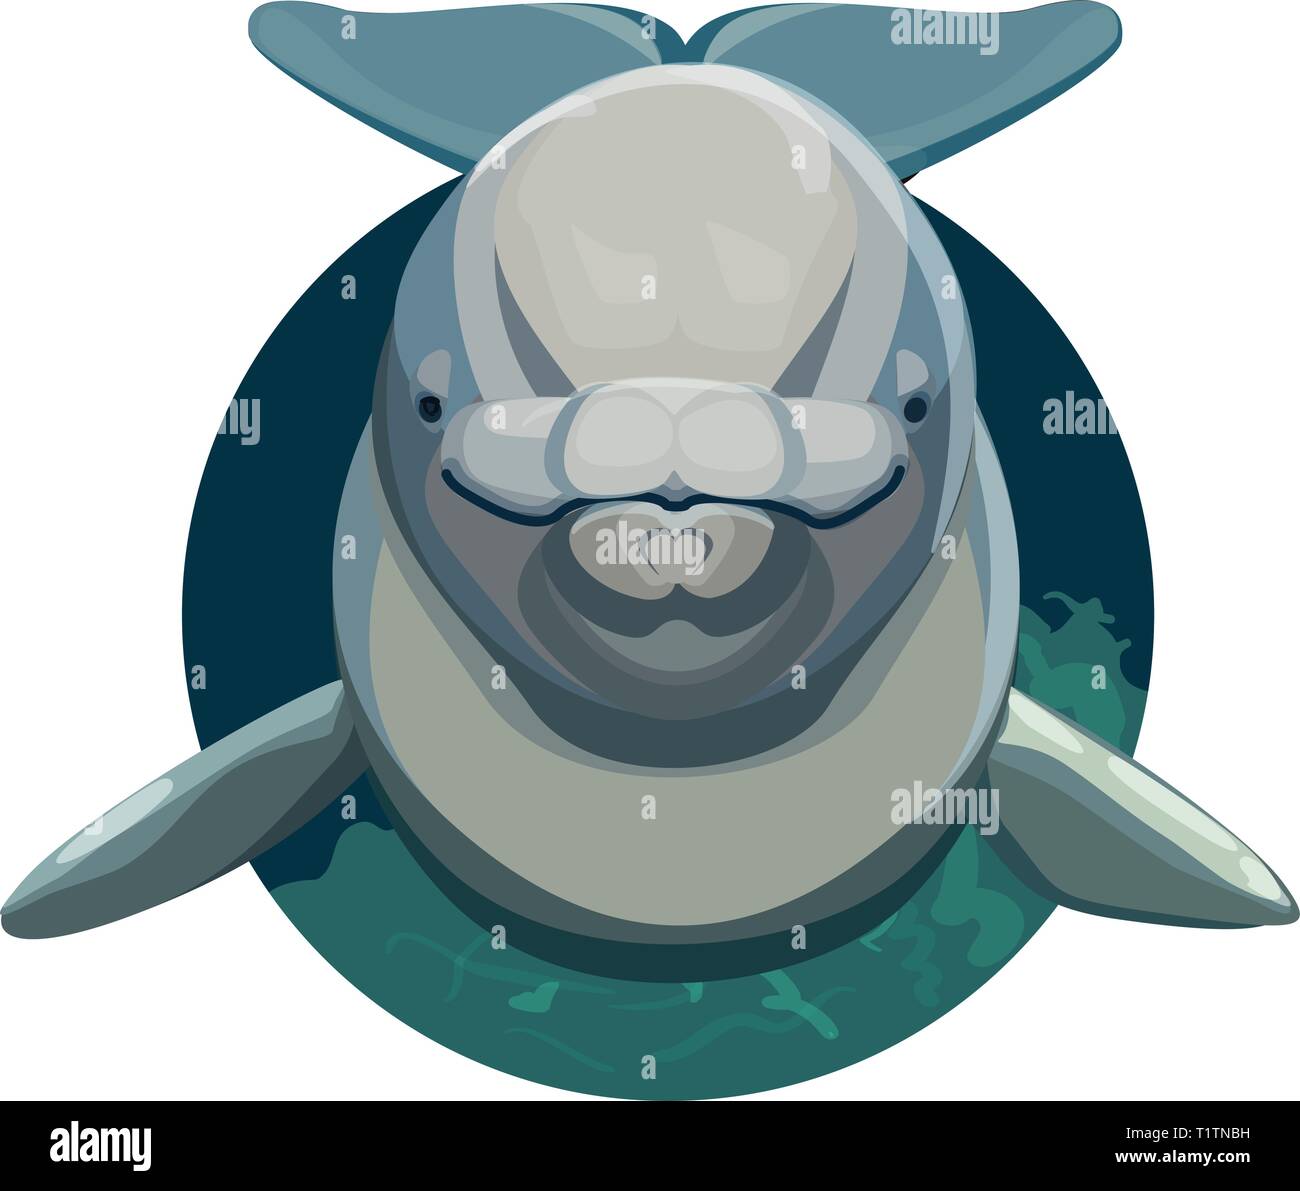 Beluga whale face on in a circular logo like fashion. Stock Vector